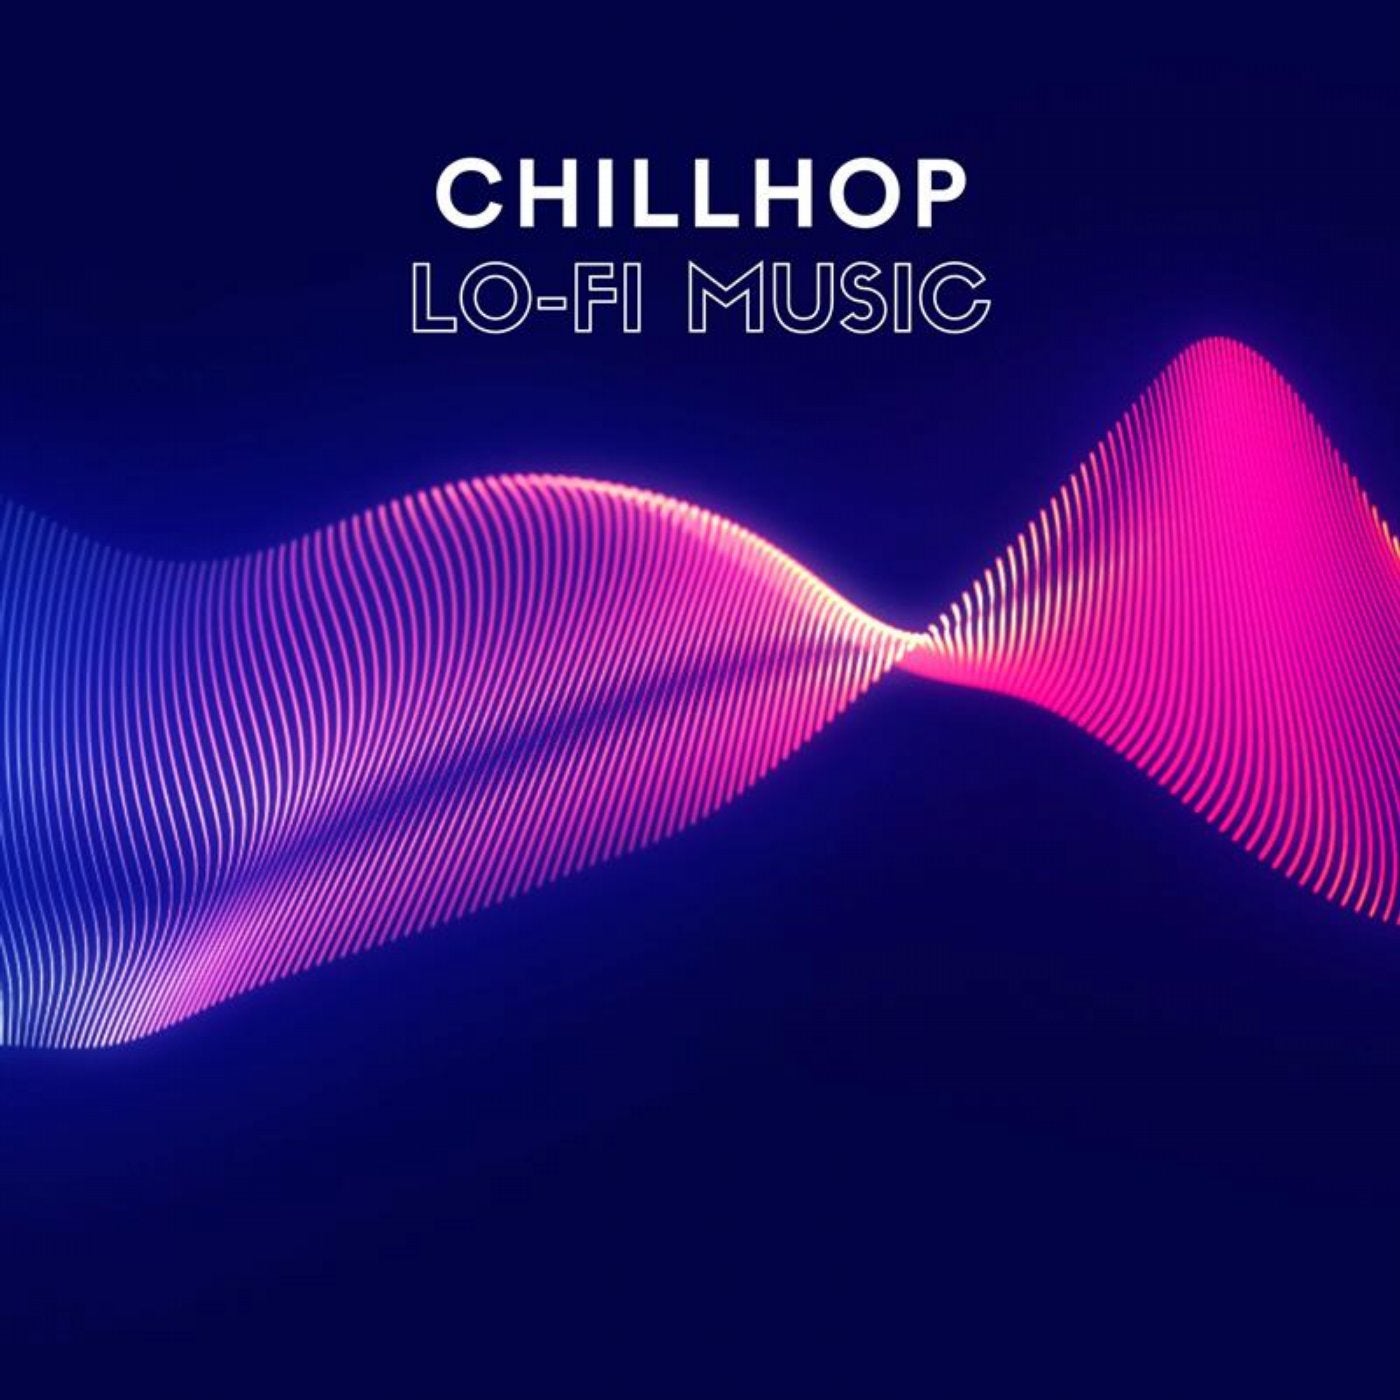 Chillhop Lo-Fi Music